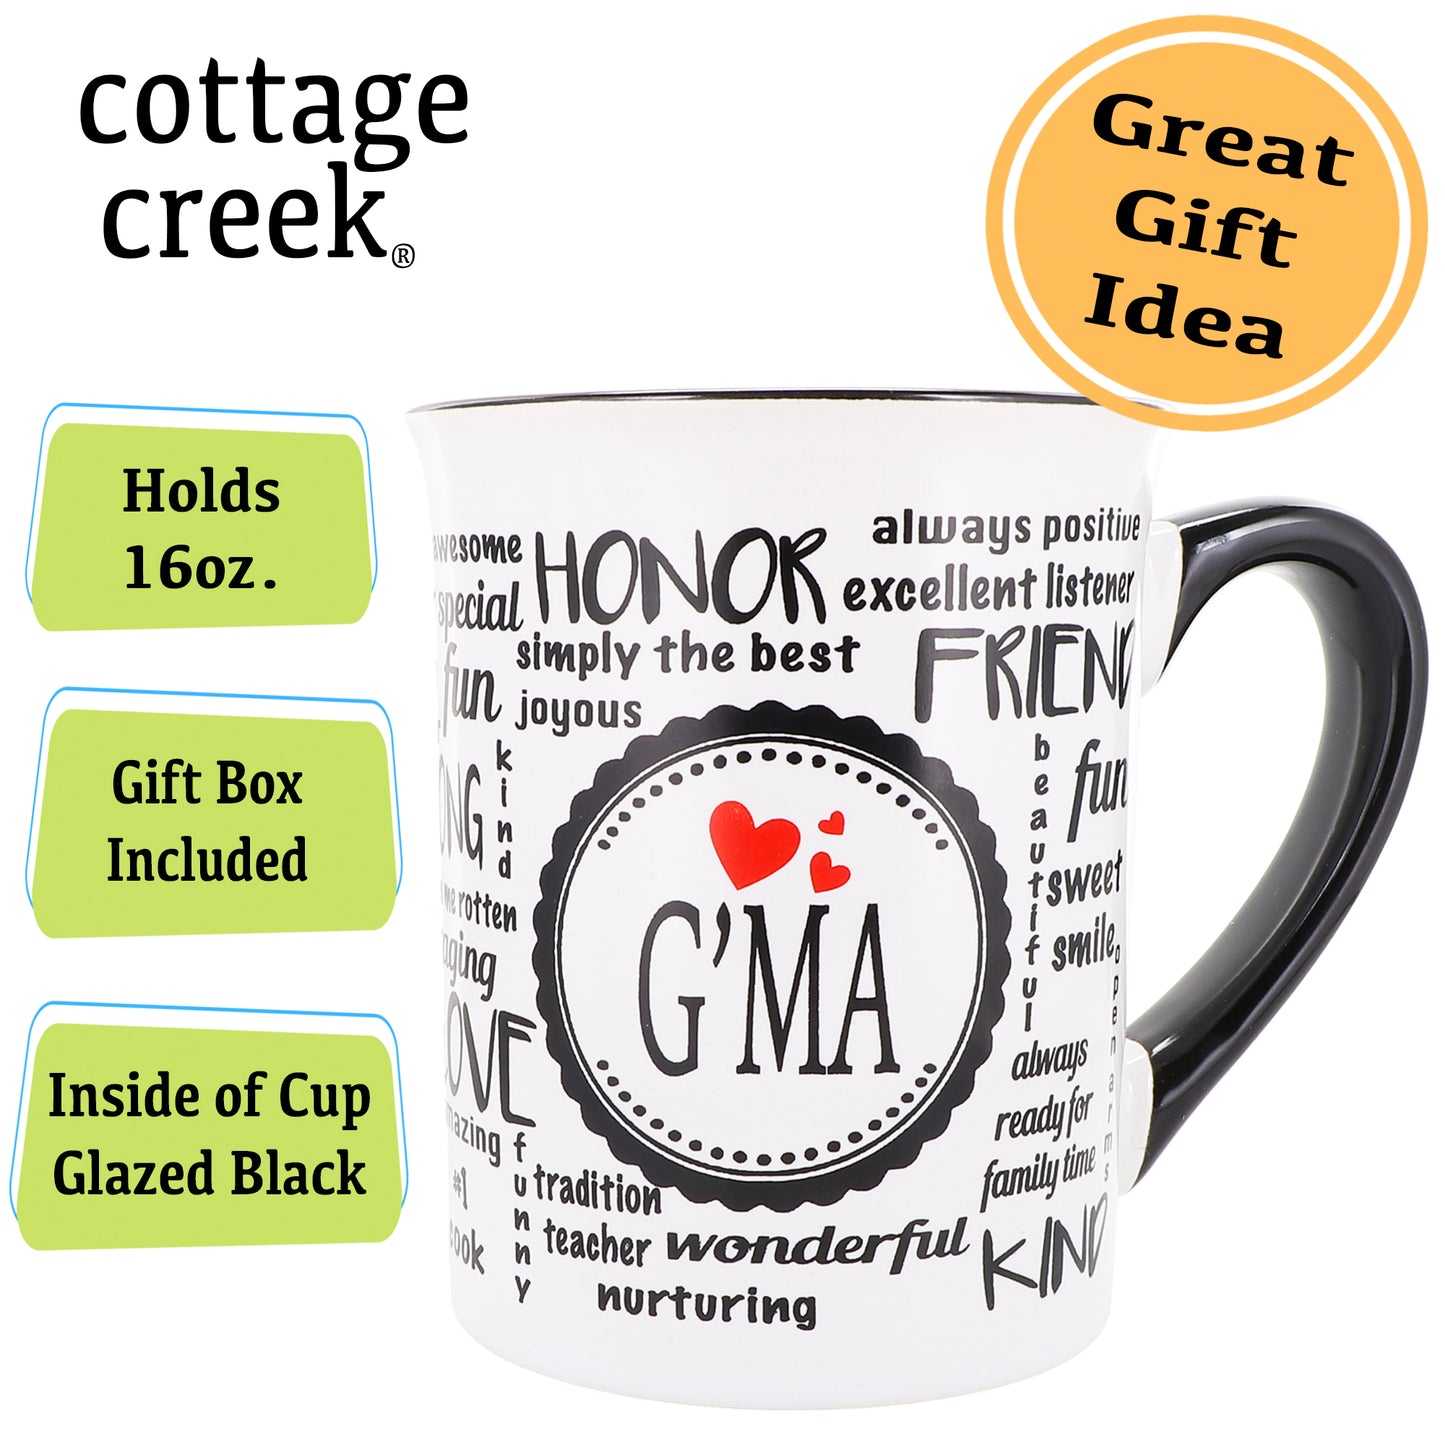 Cottage Creek G'ma Mug, Gma Coffee Mug, Ceramic, 16oz., 6" Multicolored